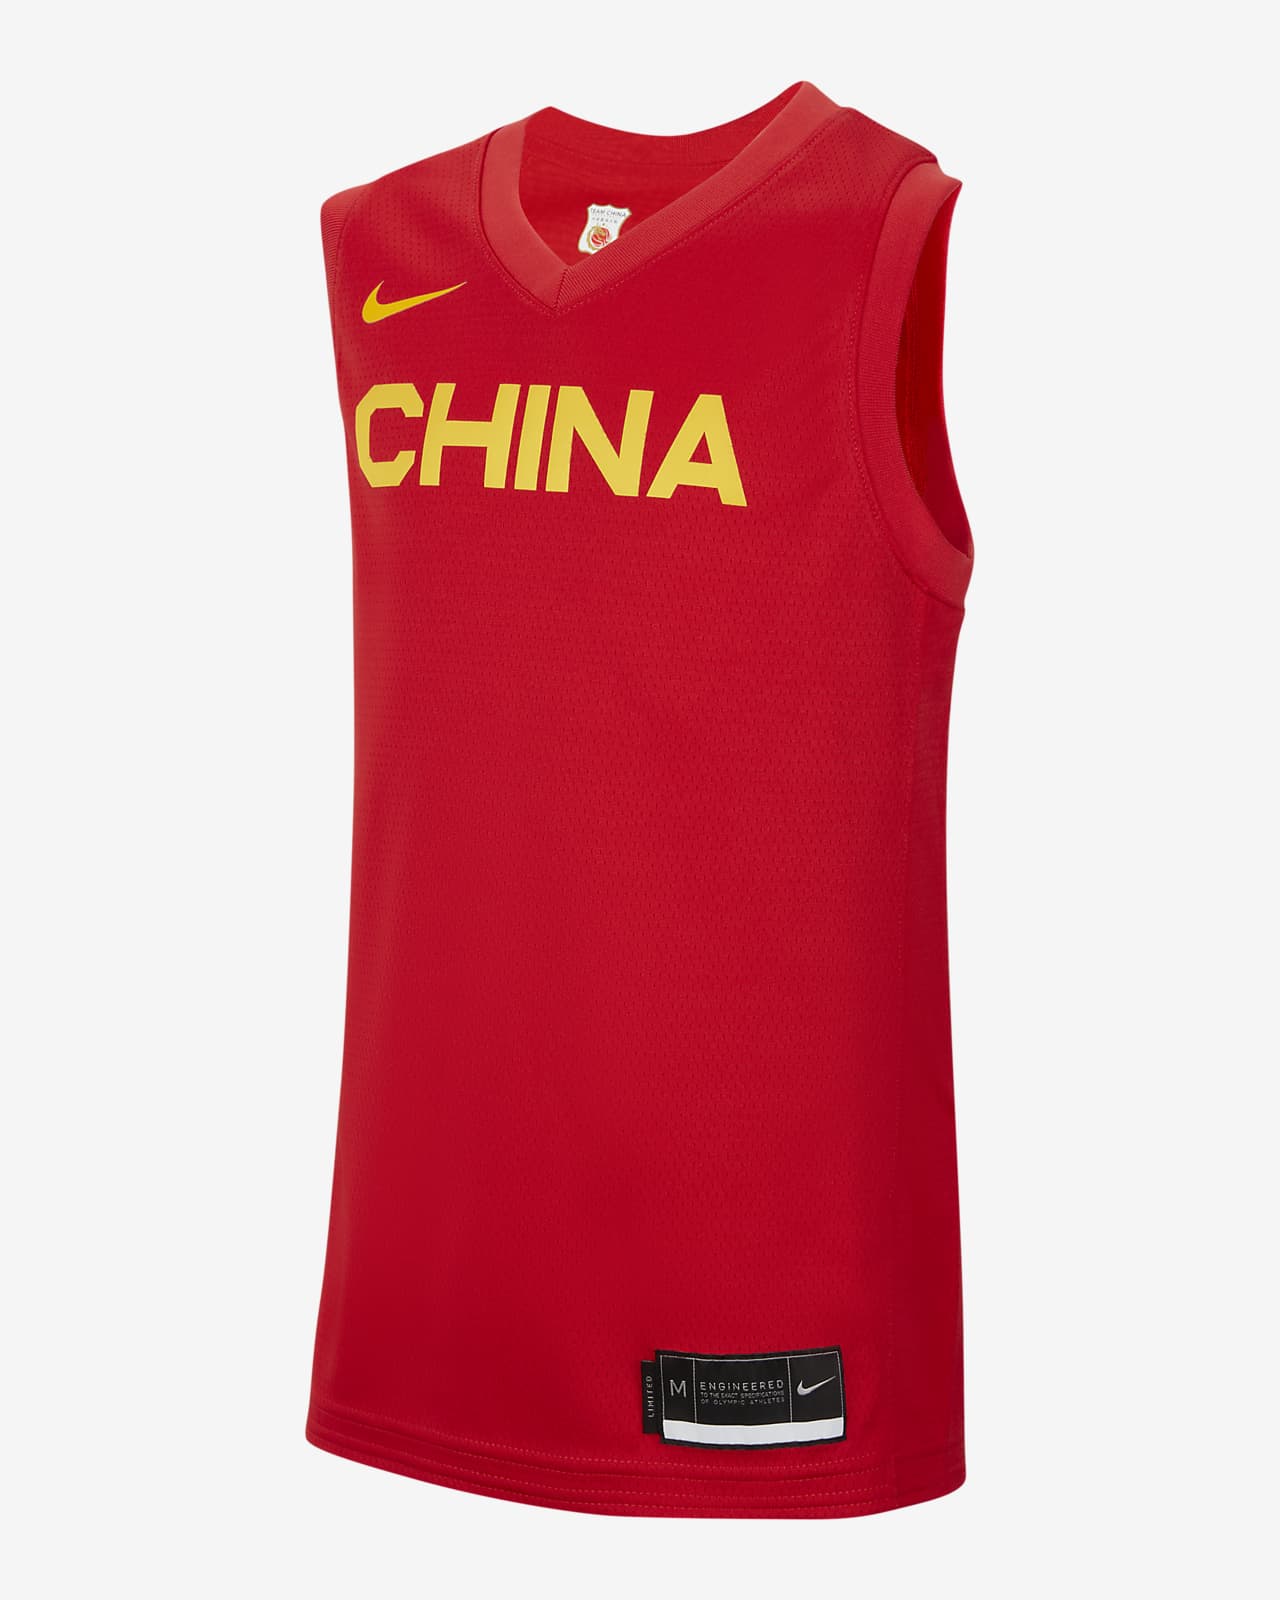 China (Road) Nike basketbaljersey voor kids